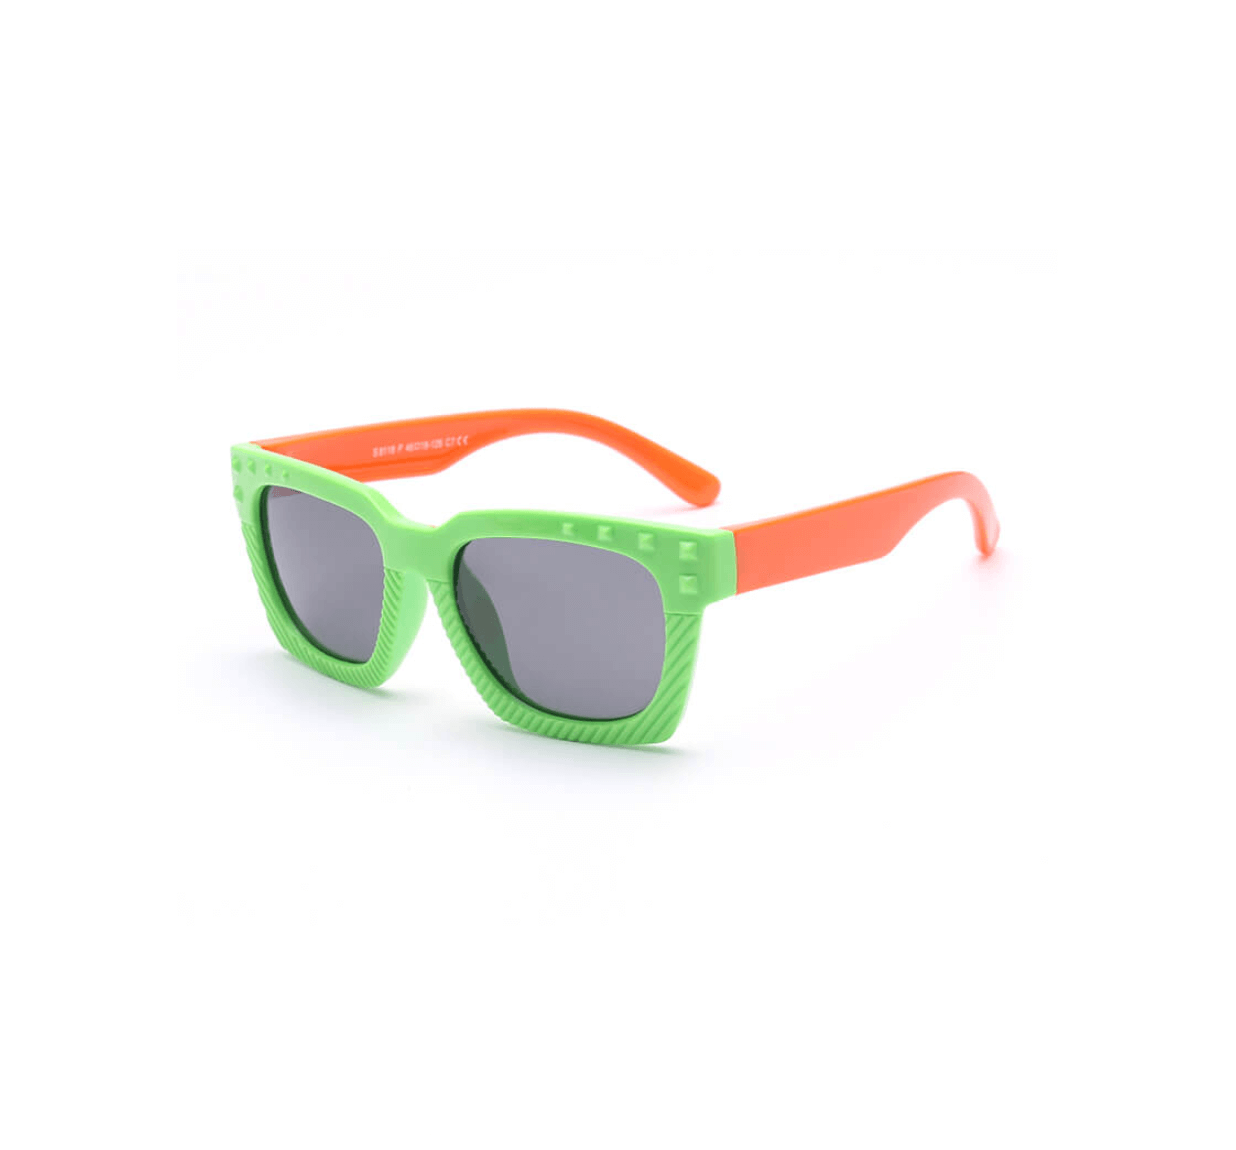 wholesale sunglasses polarized, green square kids sunglasses, wholesale polarized sunglasses China, bulk polarized sunglasses, sunglasses factory